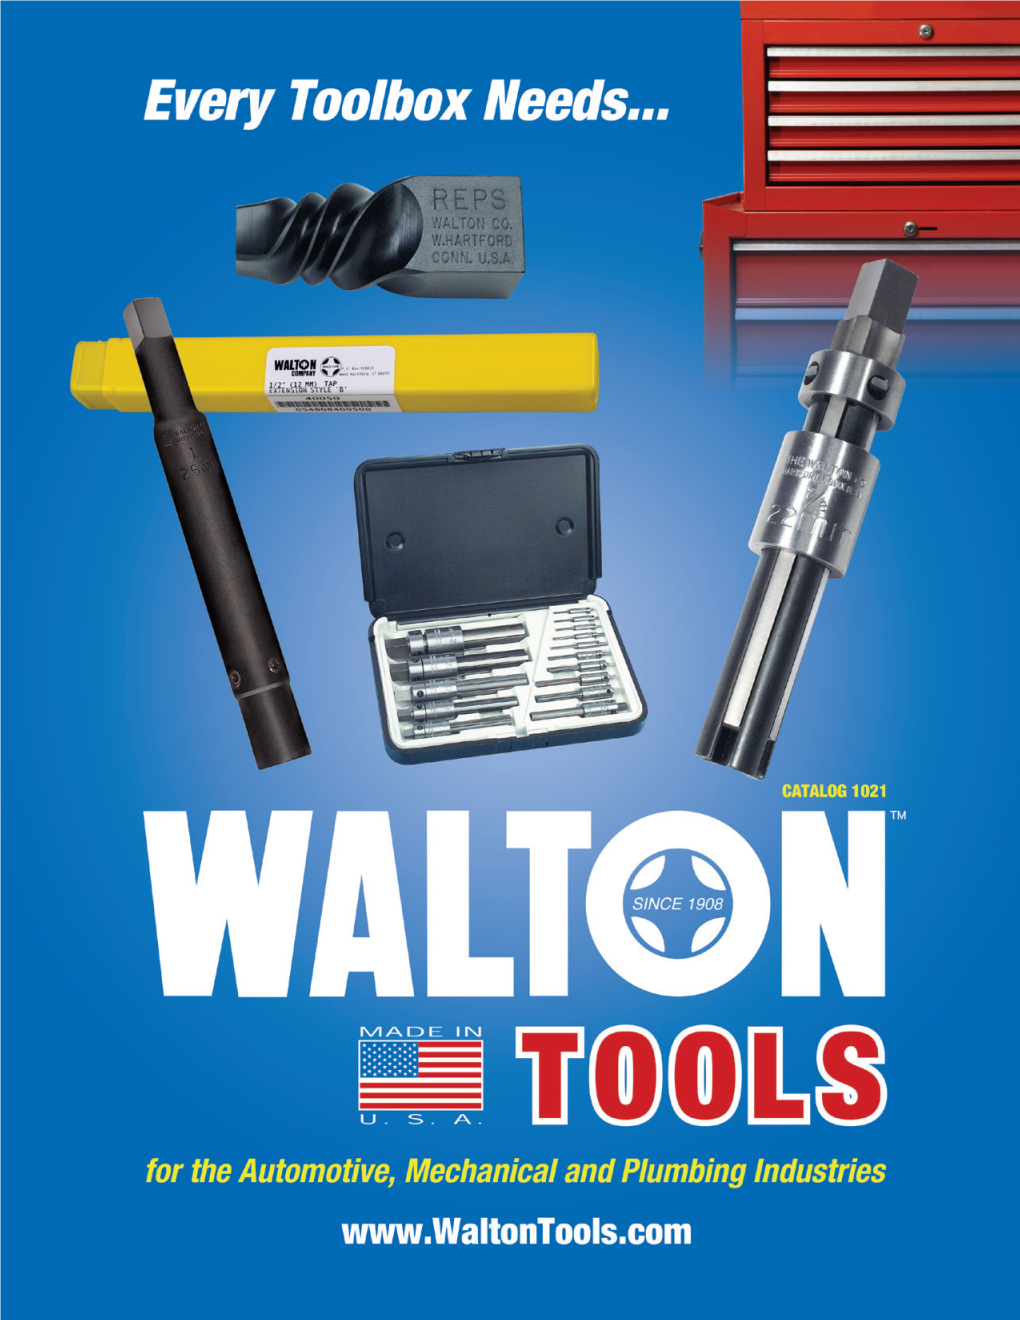 WALTON TAP EXTRACTORS • Remove Broken Taps Simply and Safely – Without Drilling, Lasers, Damaged Threads, Scrapped Parts Or Repair Inserts